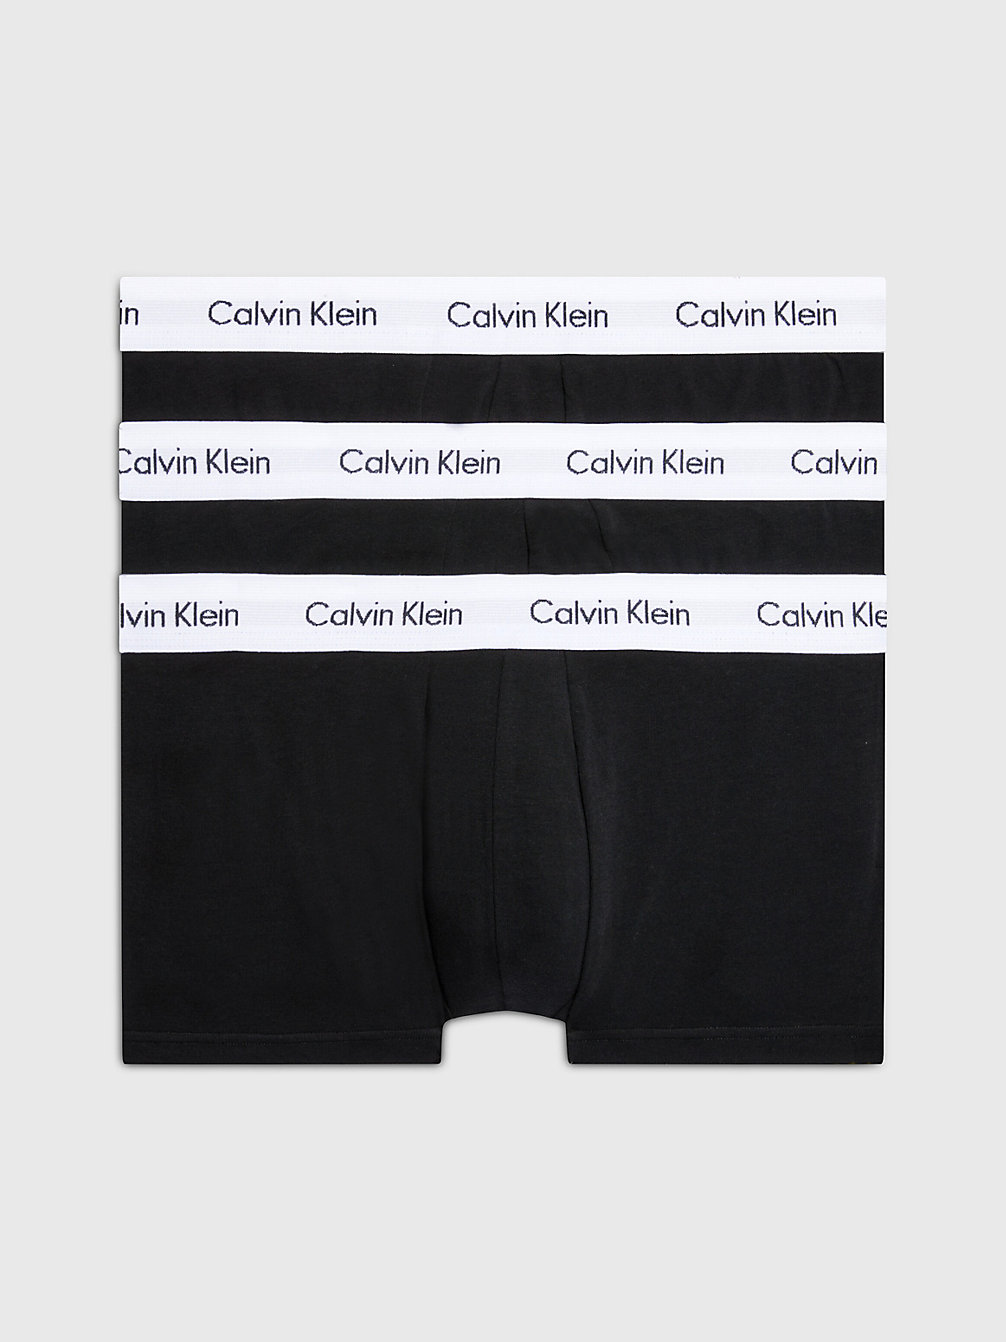 BLACK > Комплект боксеров низкой посадки 3 шт. - Cotton Stretch > undefined женщины - Calvin Klein